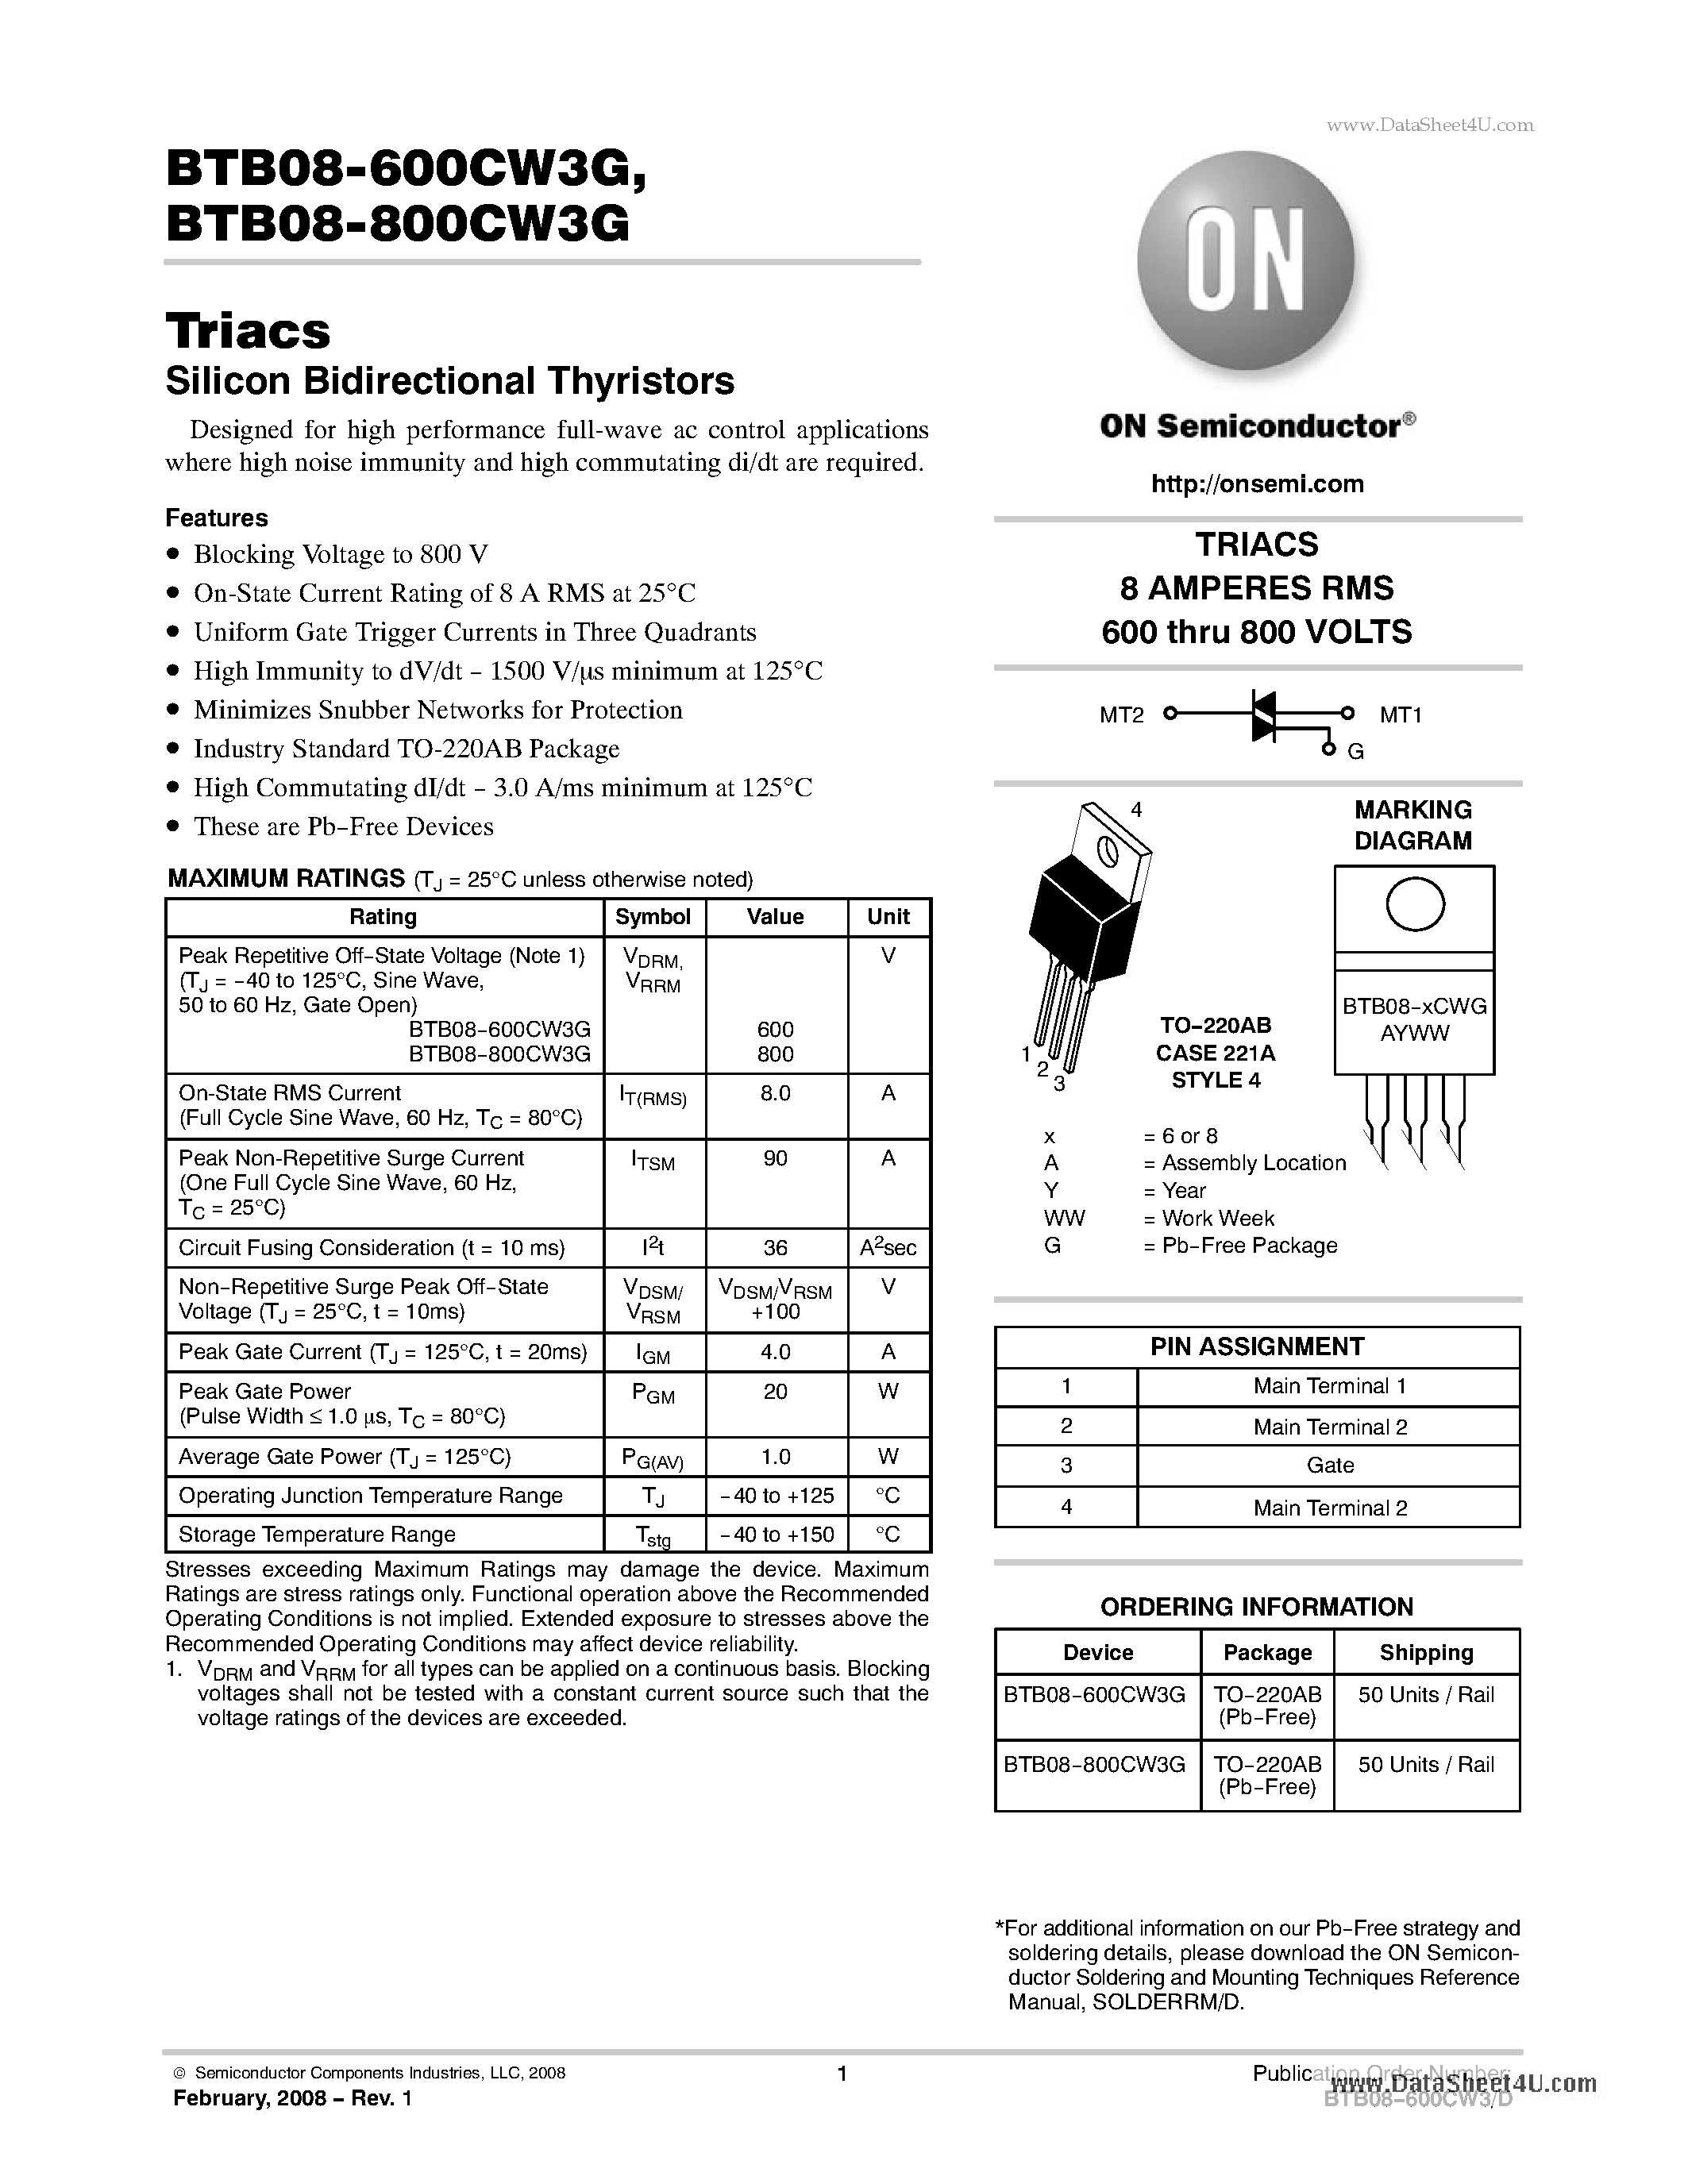 Datasheet BTB08-600CW3G - Triacs Silicon Bidirectional Thyristors page 1